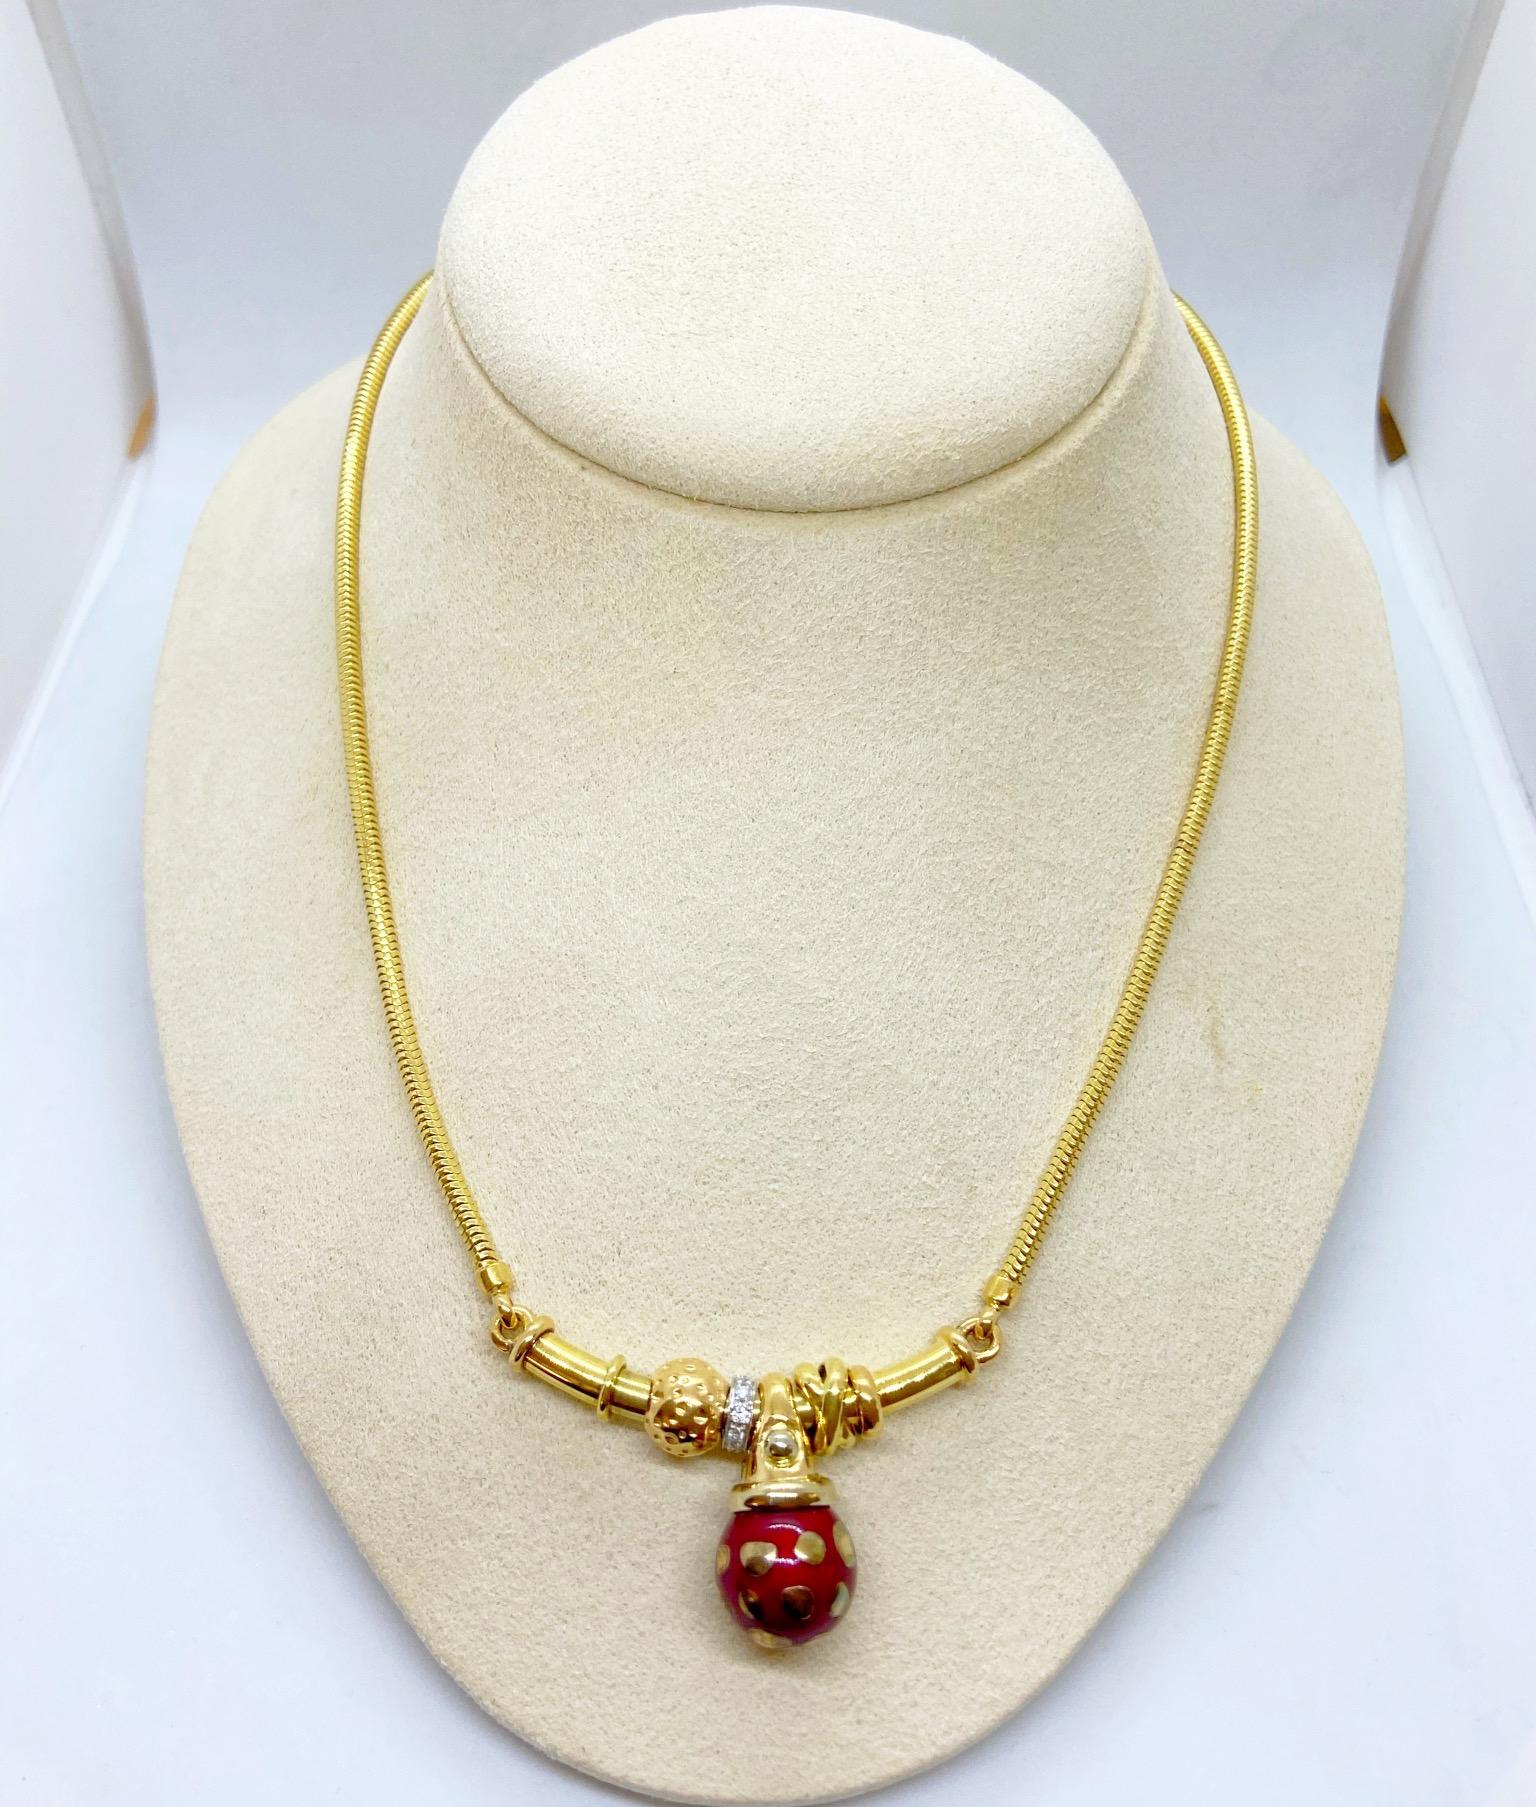 Women's or Men's La Nouvelle Bague 18 Karat Gold Necklace with Red Enamel Ball and Diamonds